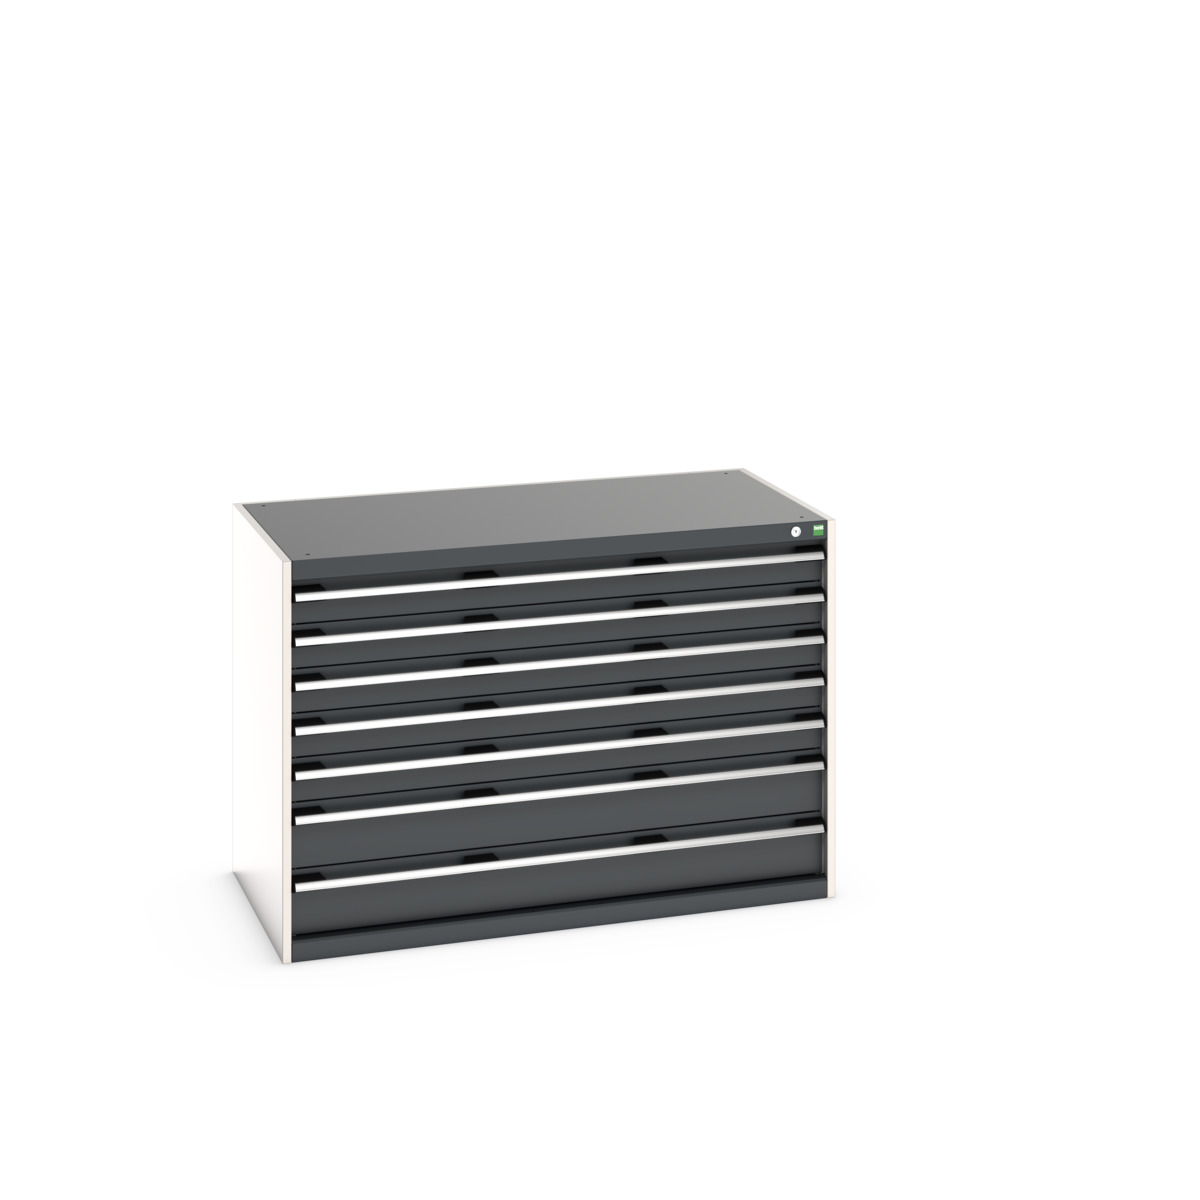 40030087. - cubio drawer cabinet